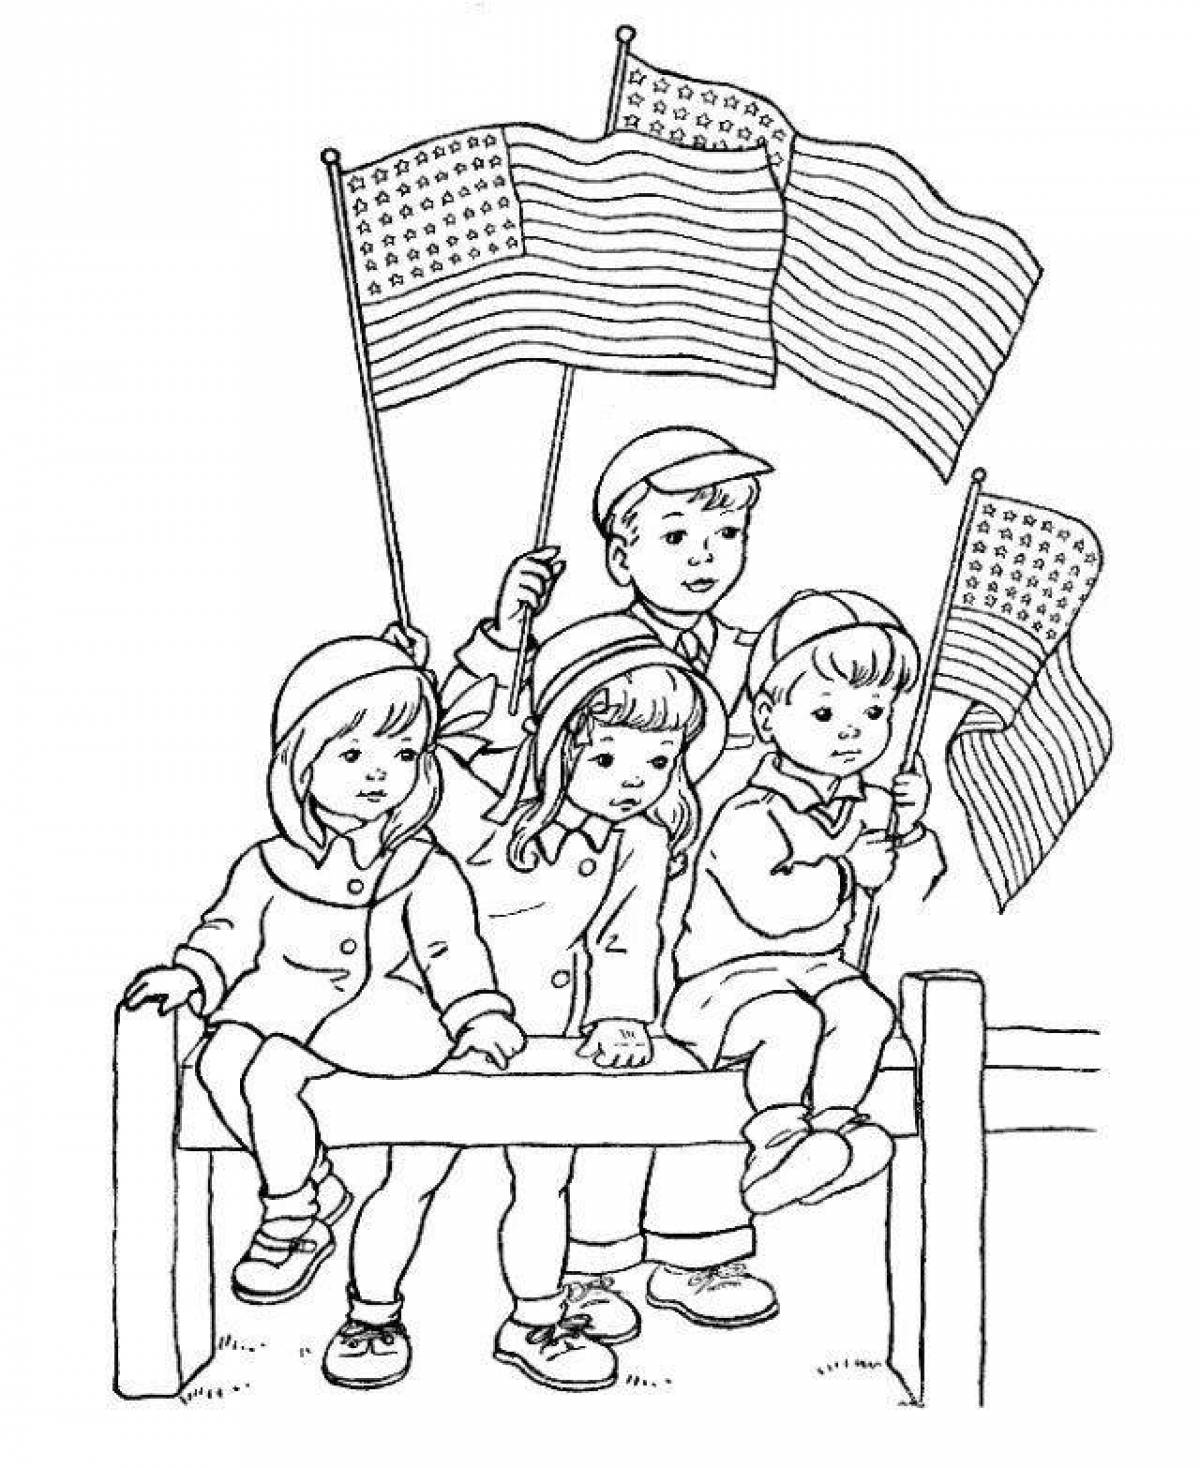 On patriotic education in kindergarten #7